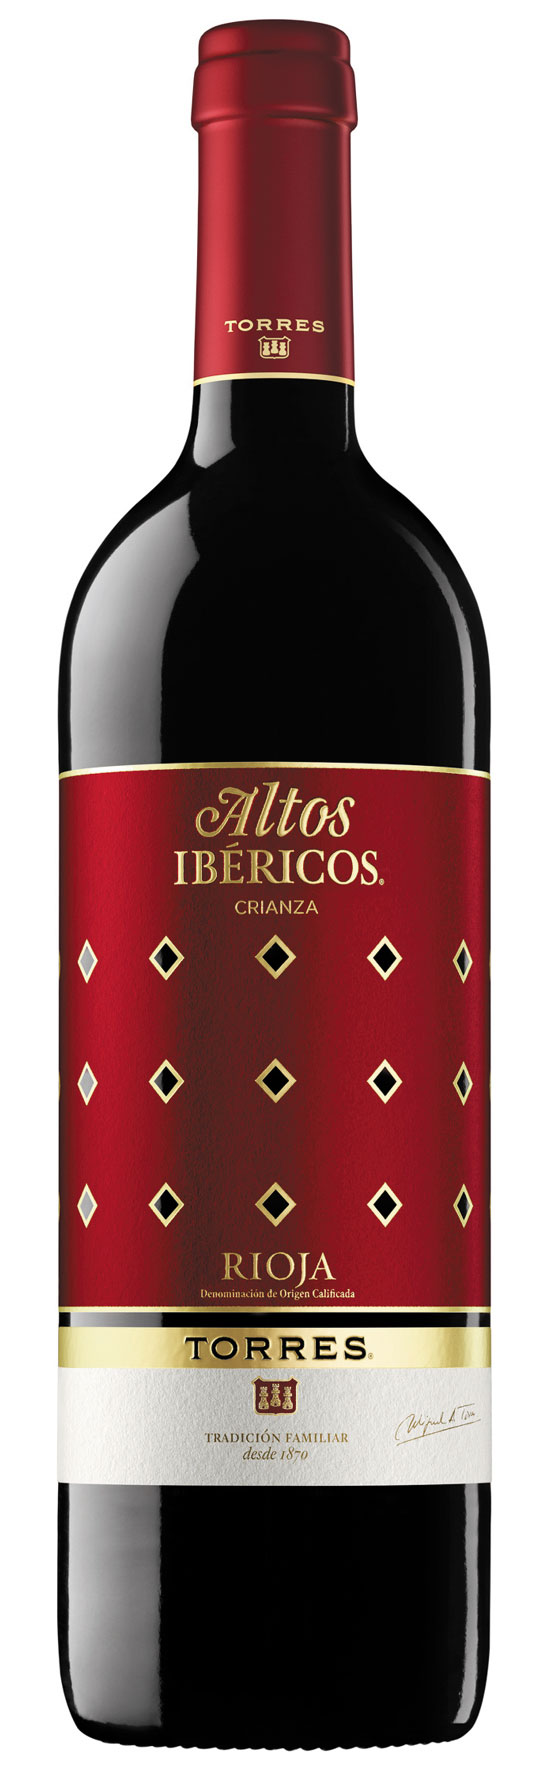 Spanischer Rotwein Nobile Vinum Ibericos Altos Rioja 2019 Crianza | Torres